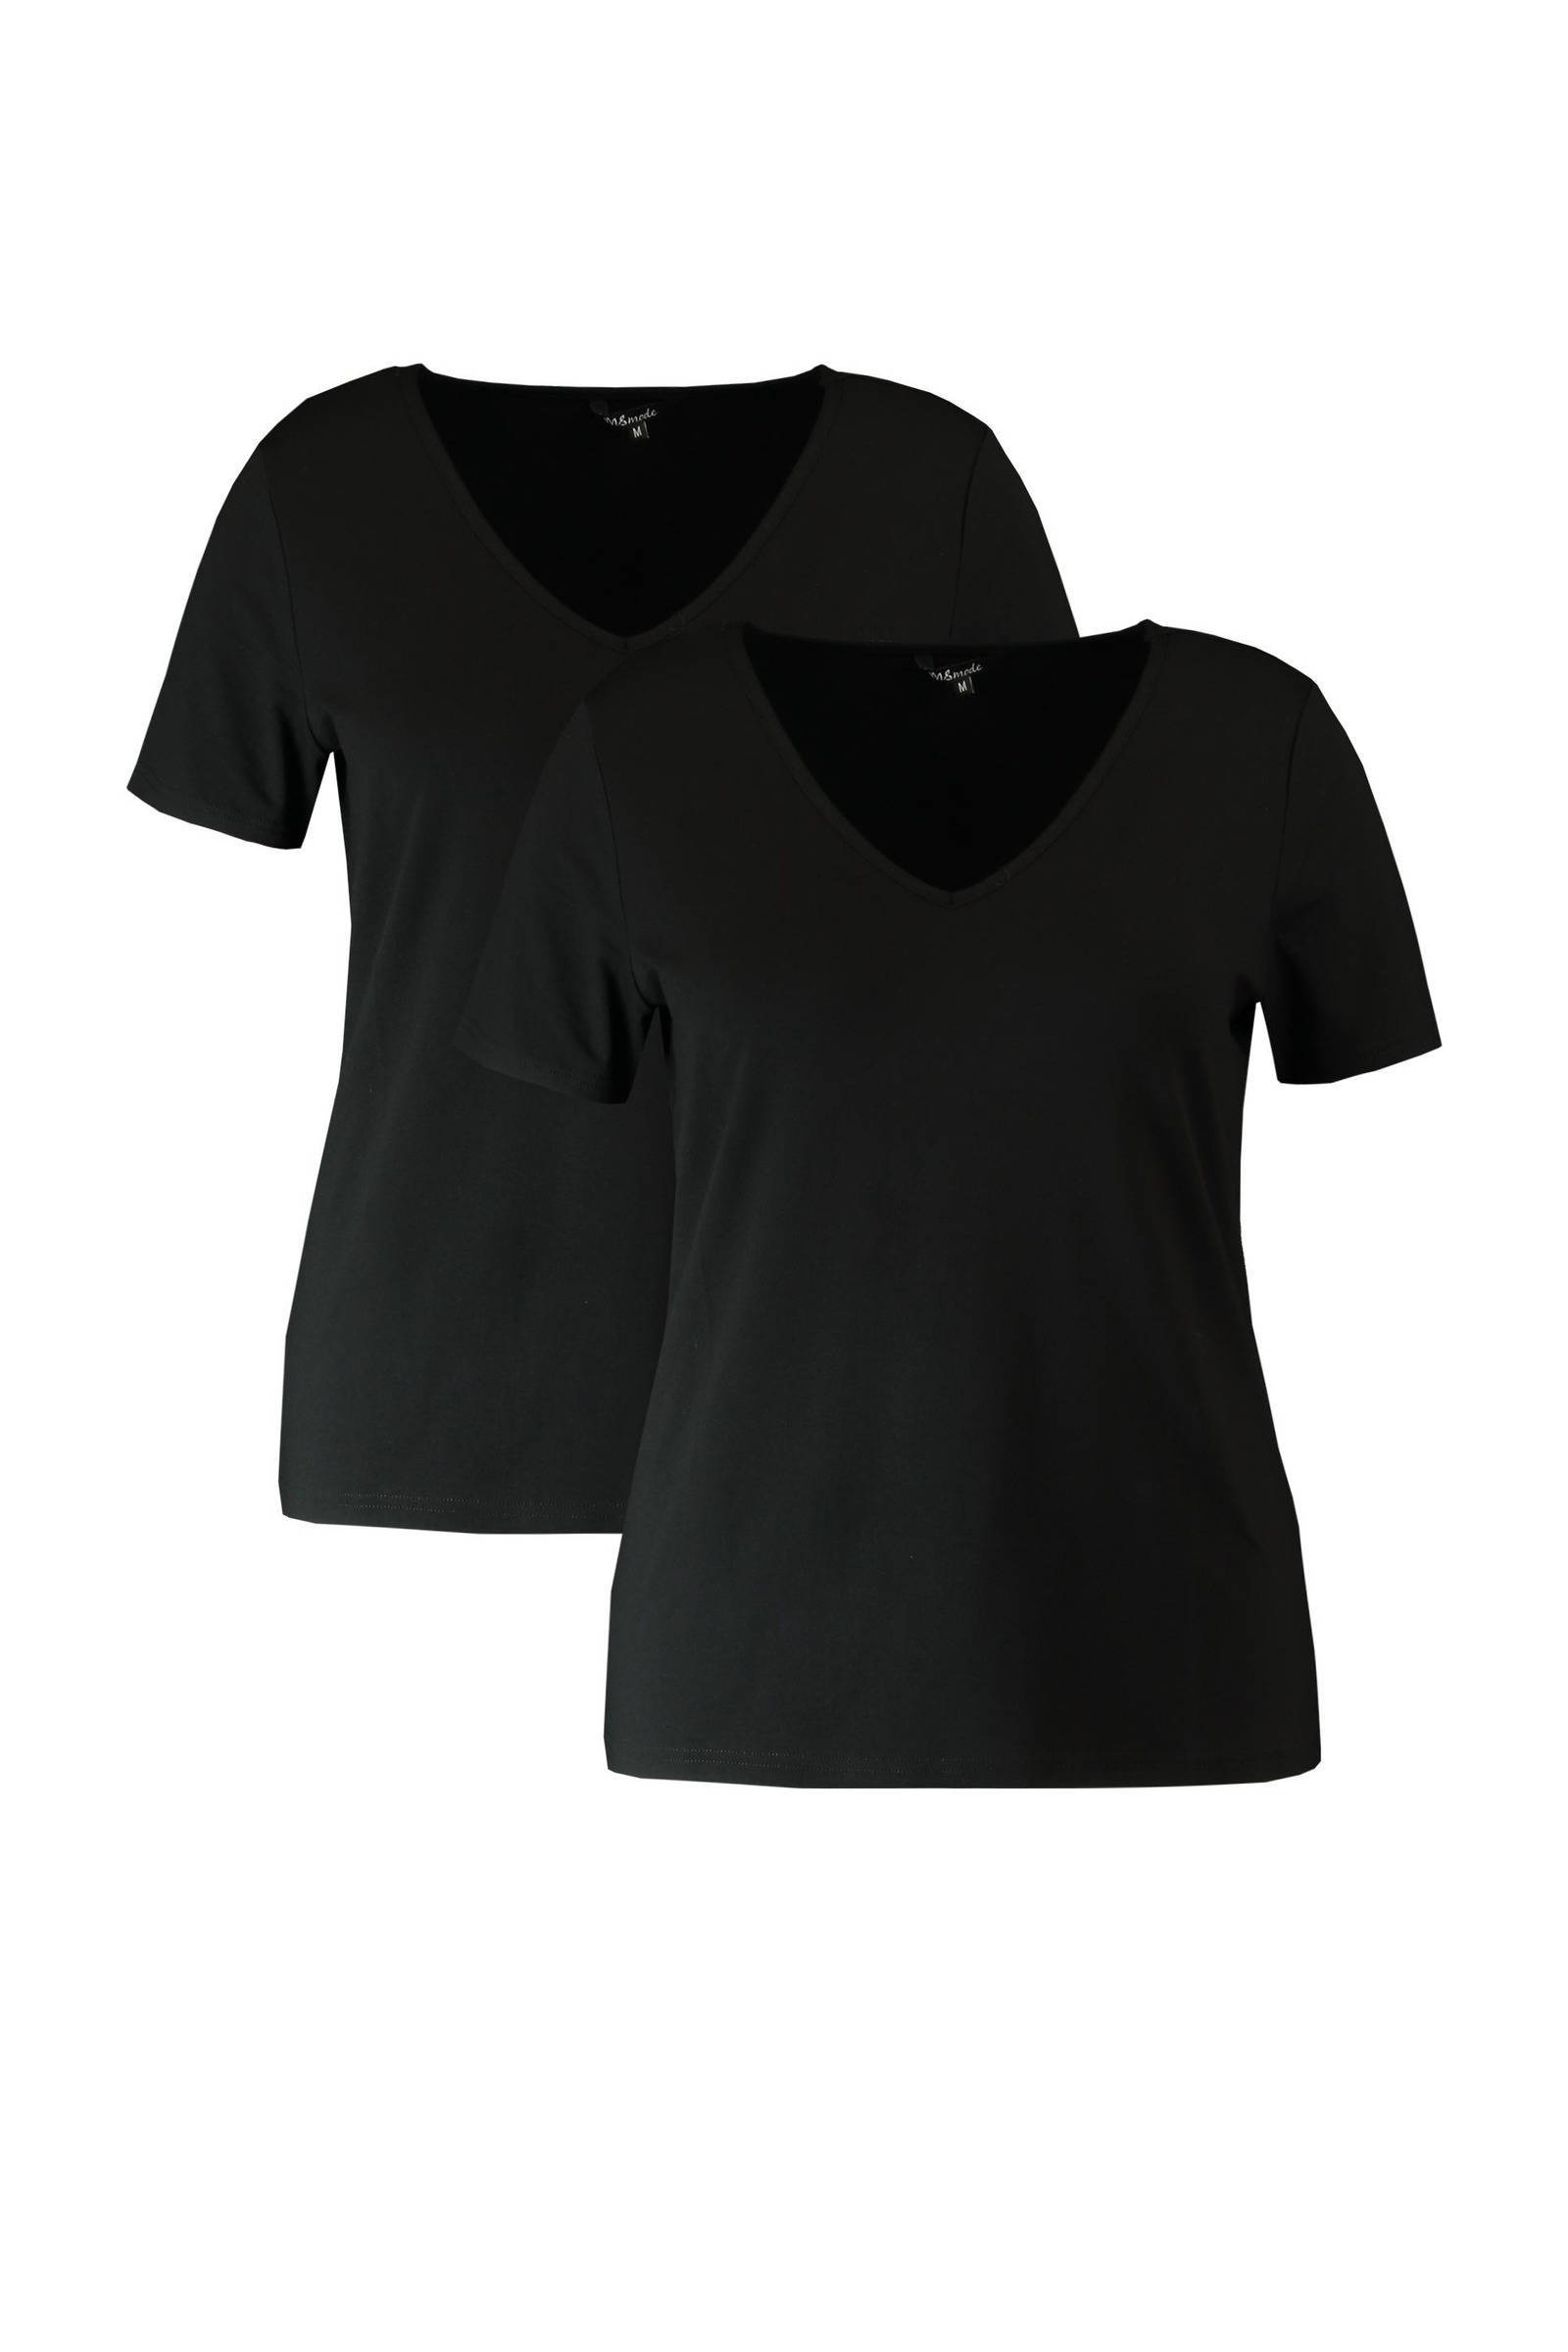 MS Mode basic T shirt set van 2 zwart online kopen